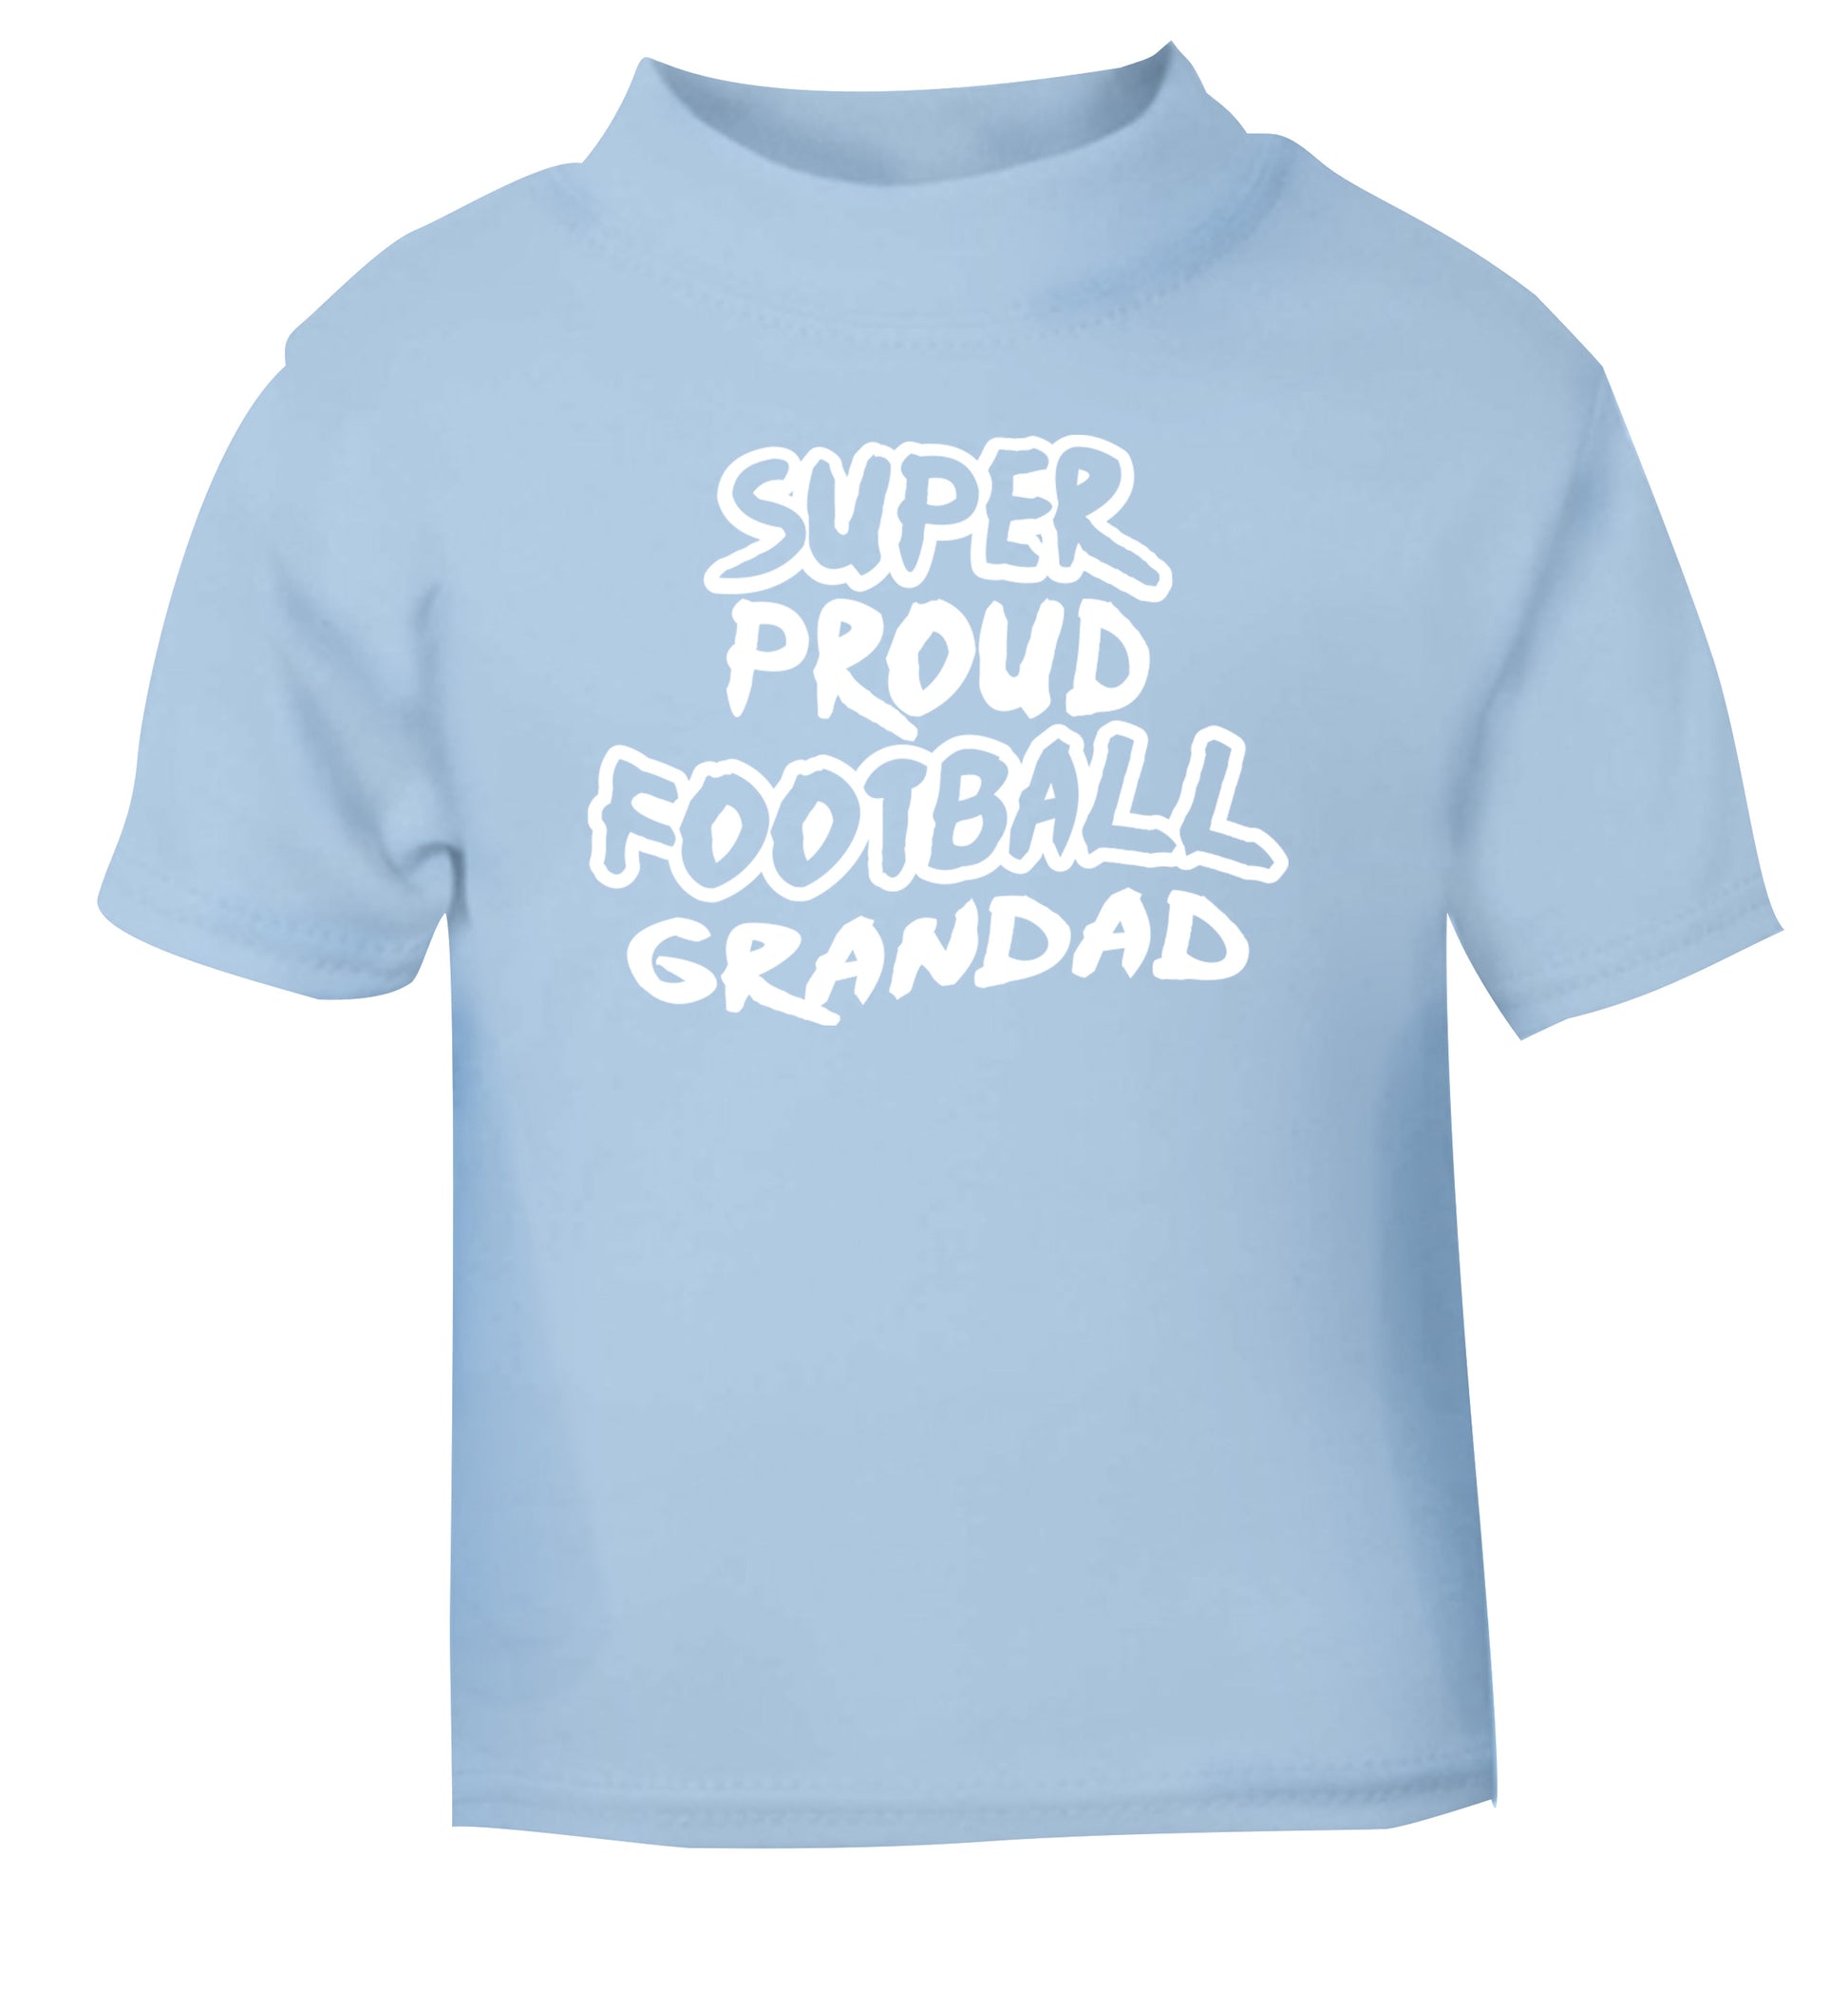 Super proud football grandad light blue Baby Toddler Tshirt 2 Years